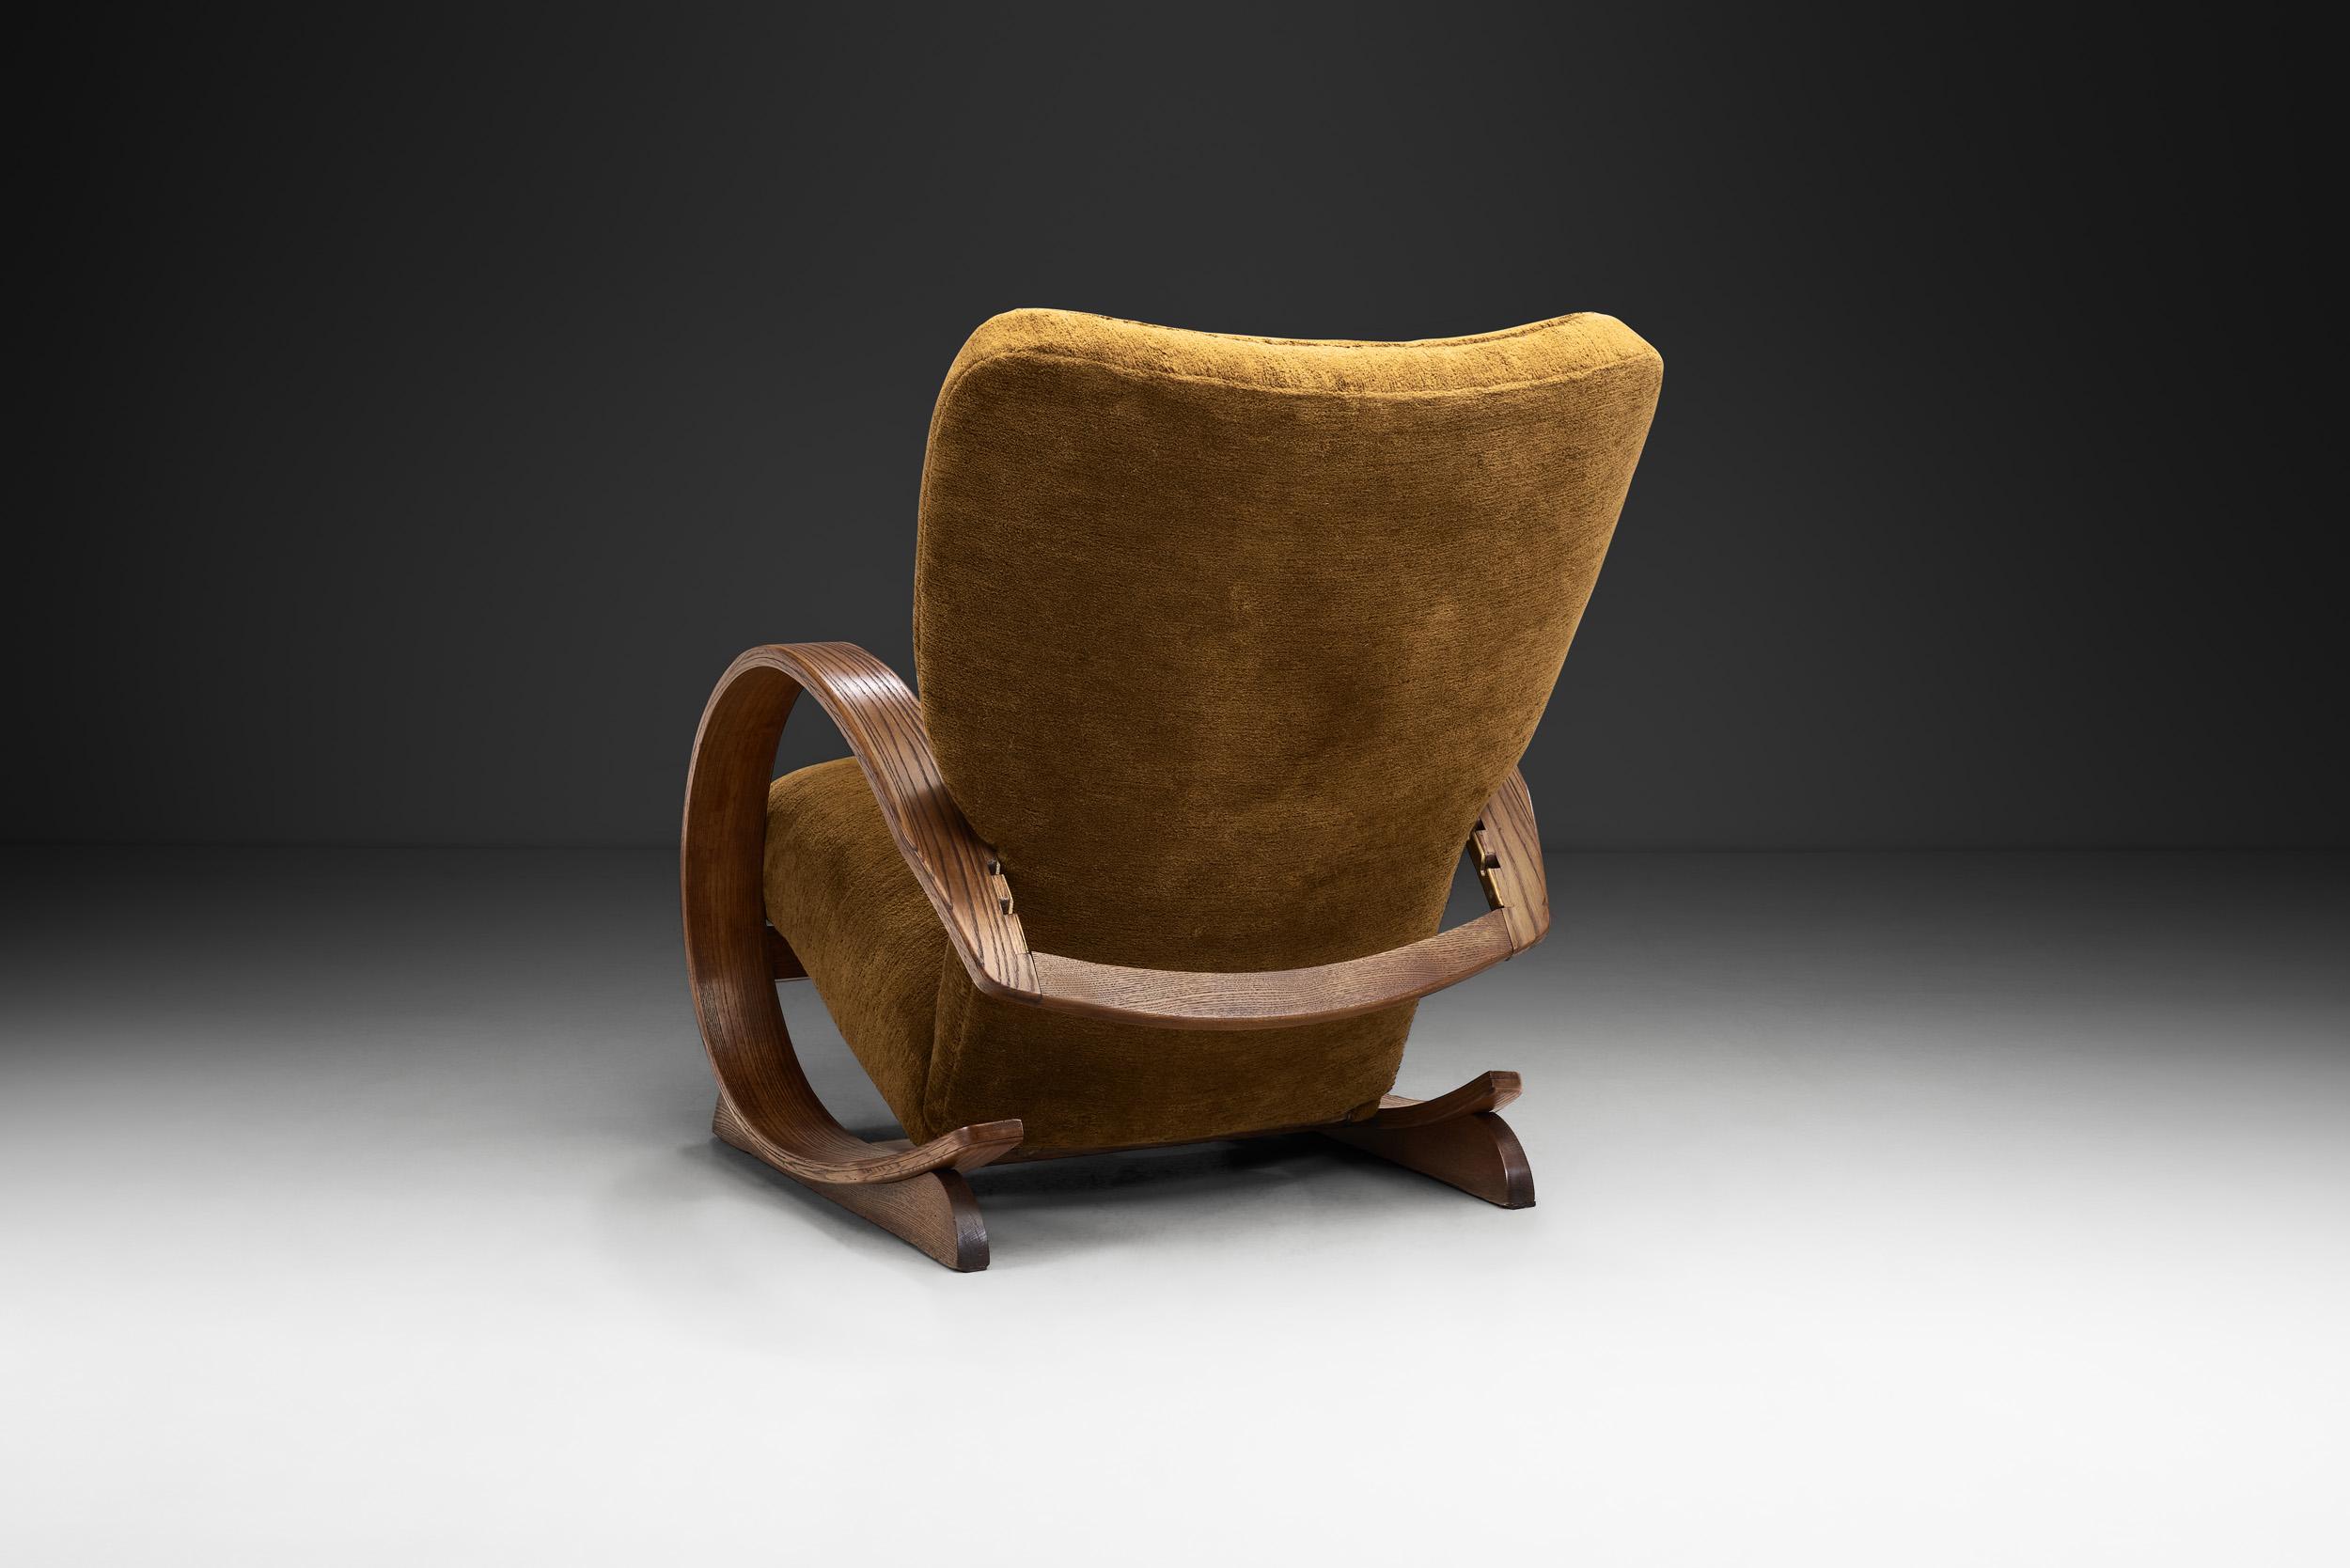 European Art Deco Cantilever Lounge Chair, Europe ca 1930s